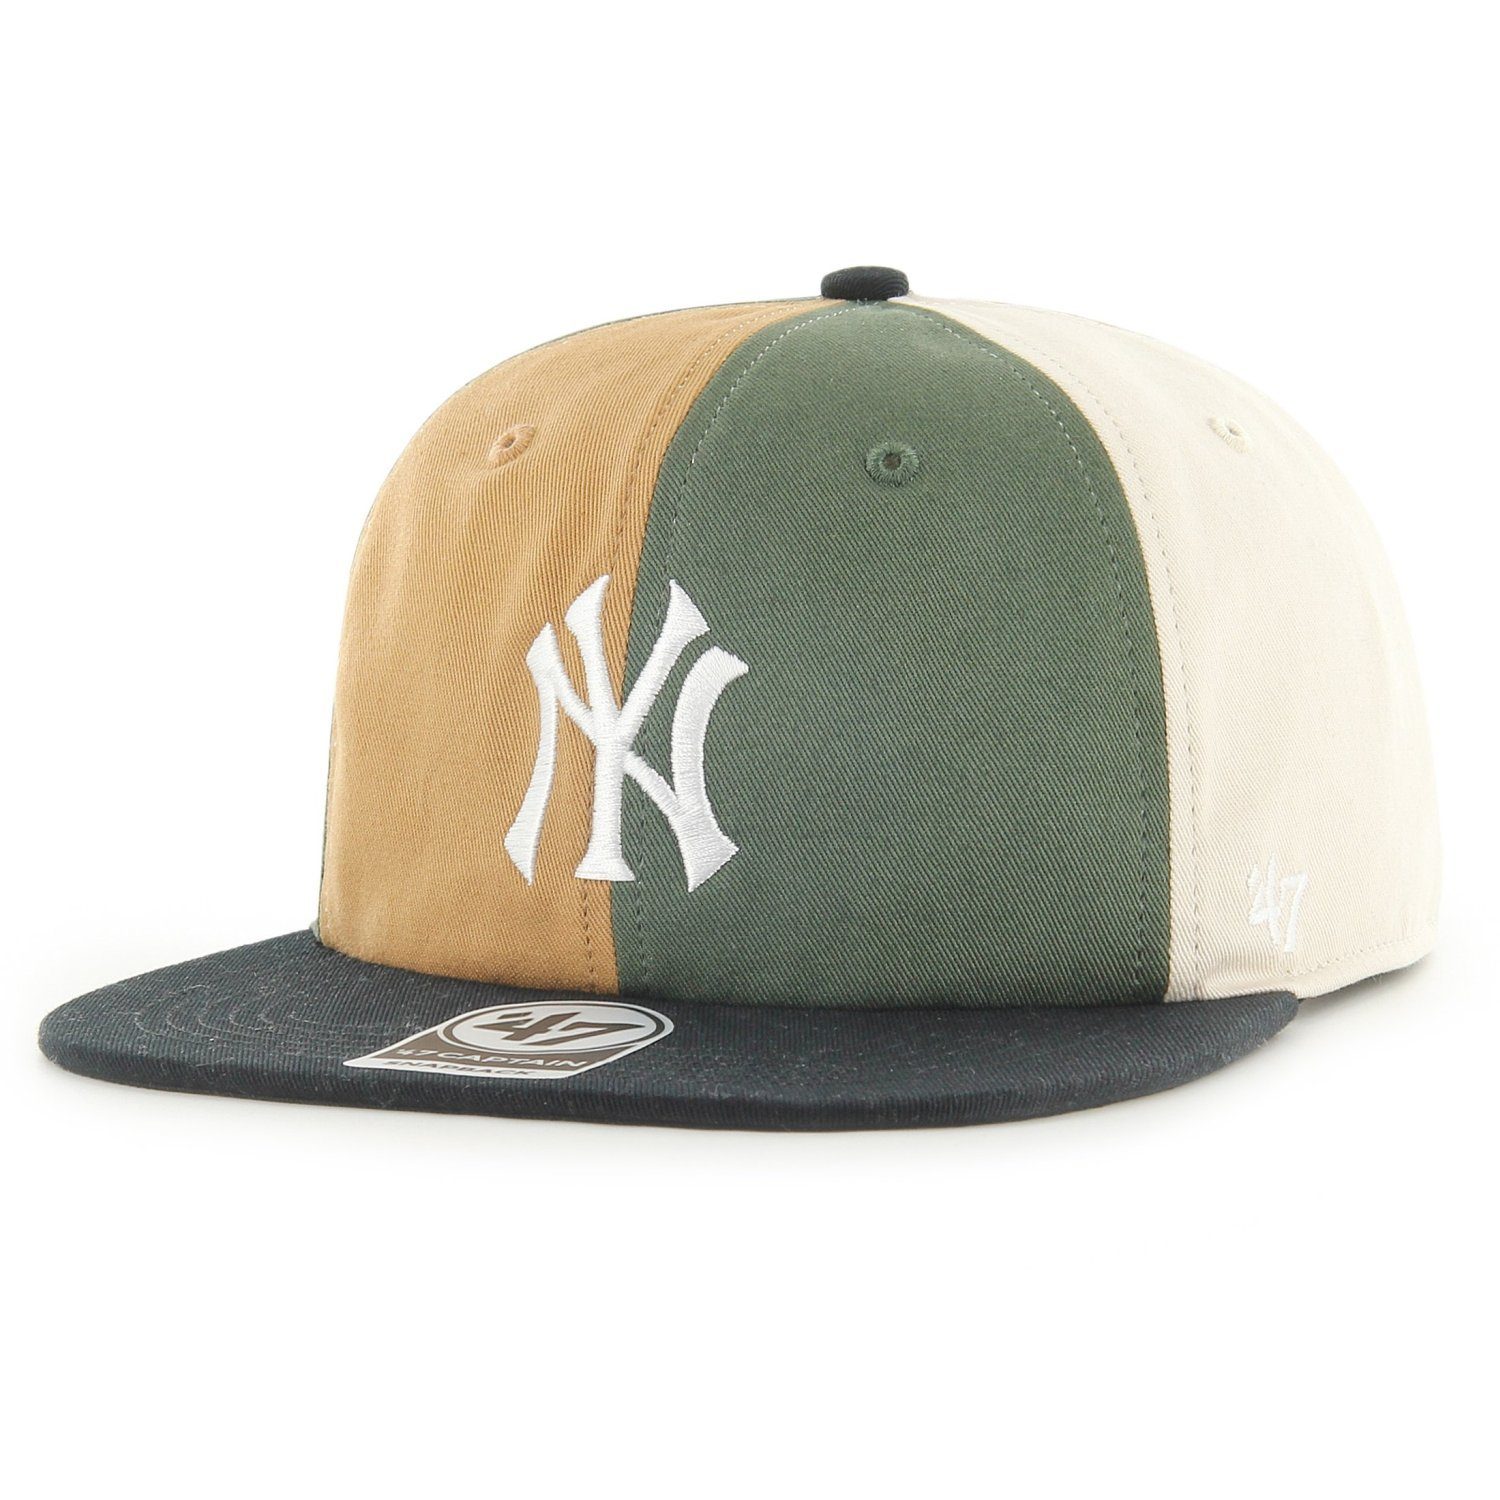 x27;47 Brand Snapback Cap MELROSE Yankees New Captain York